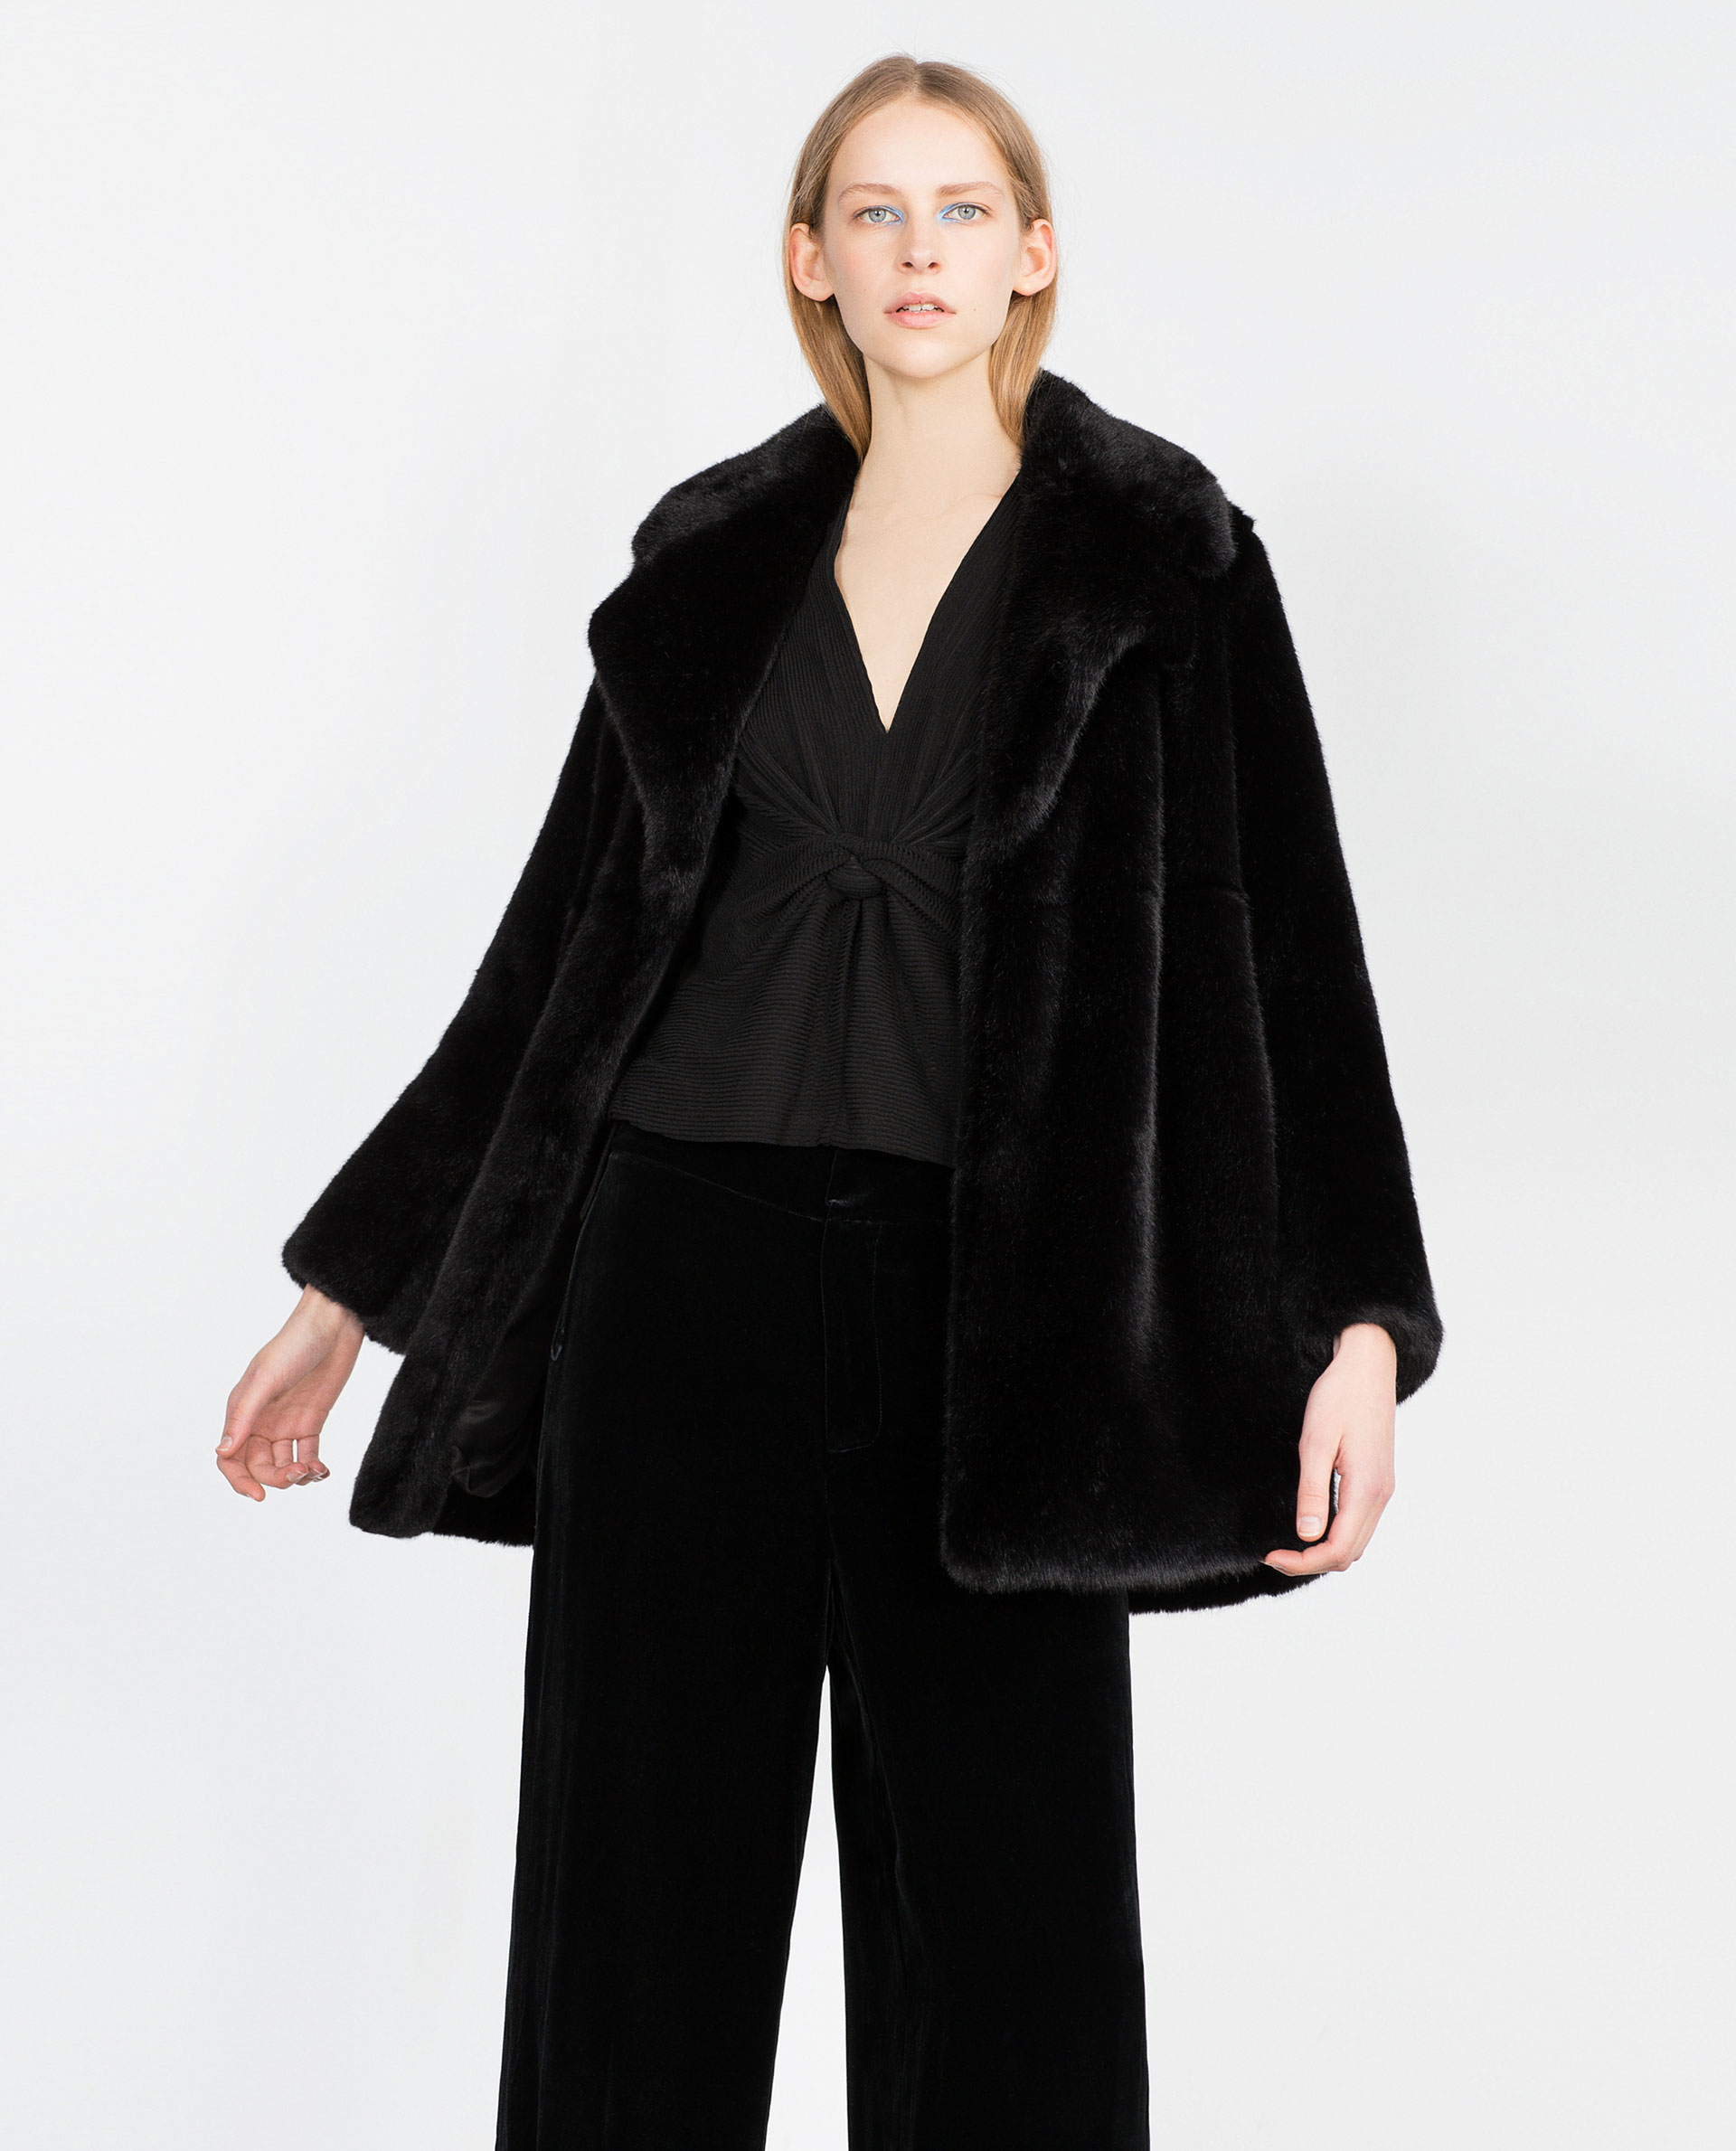 Zara Studio Faux Fur Coat in Black | Lyst